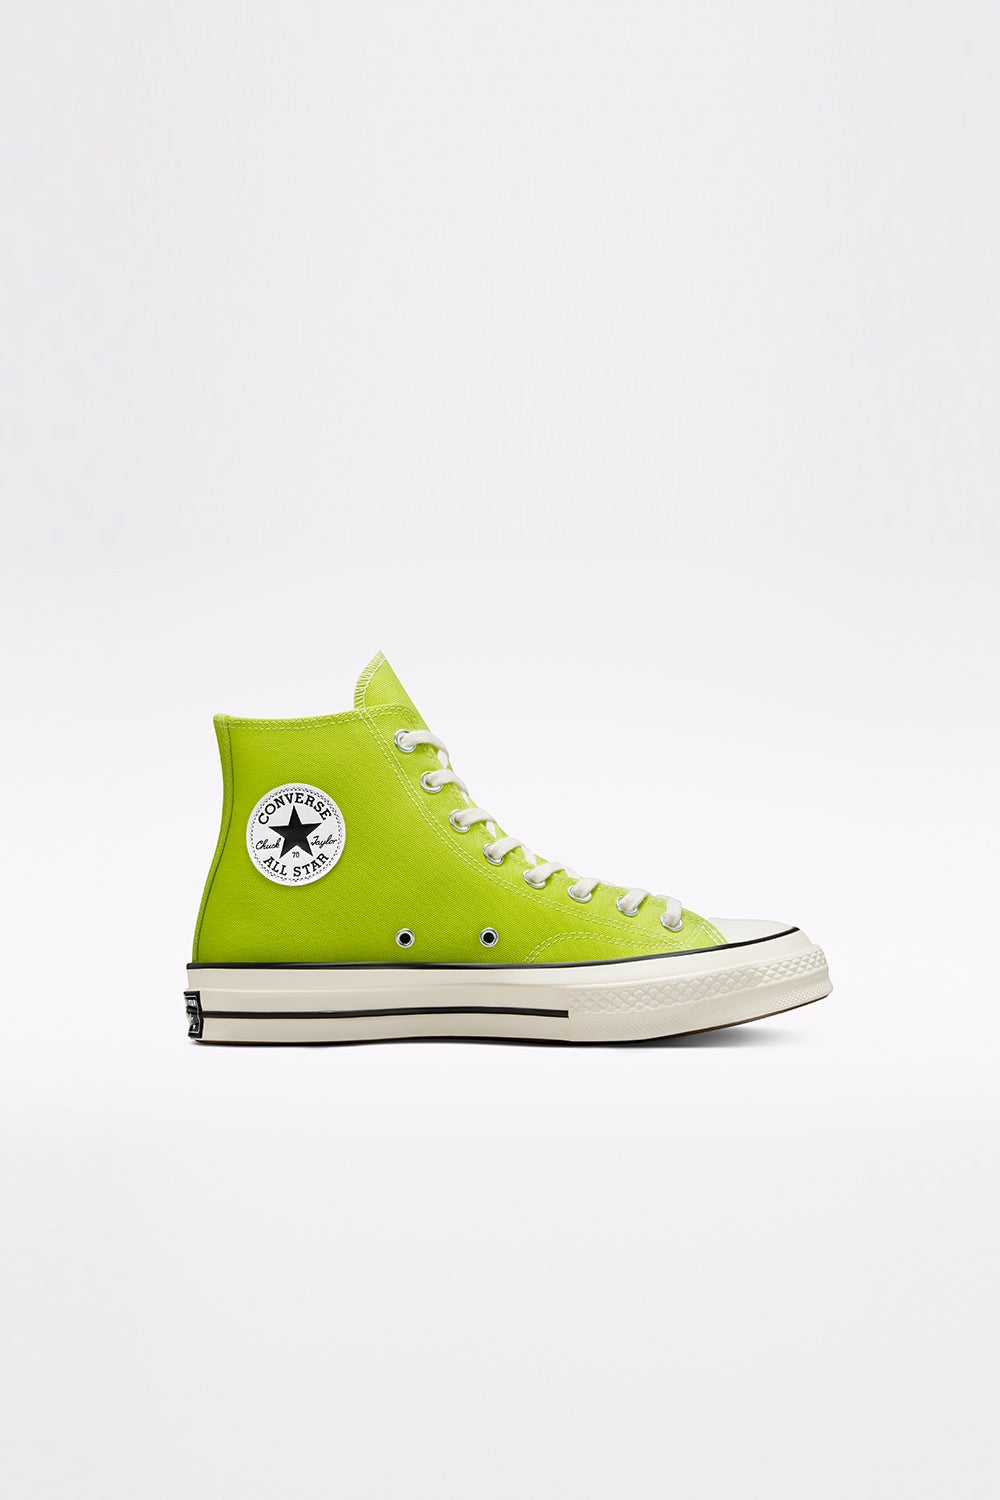 Converse Chuck 70 Recycled Canvas Seasonal Colour High Top Lime Twist